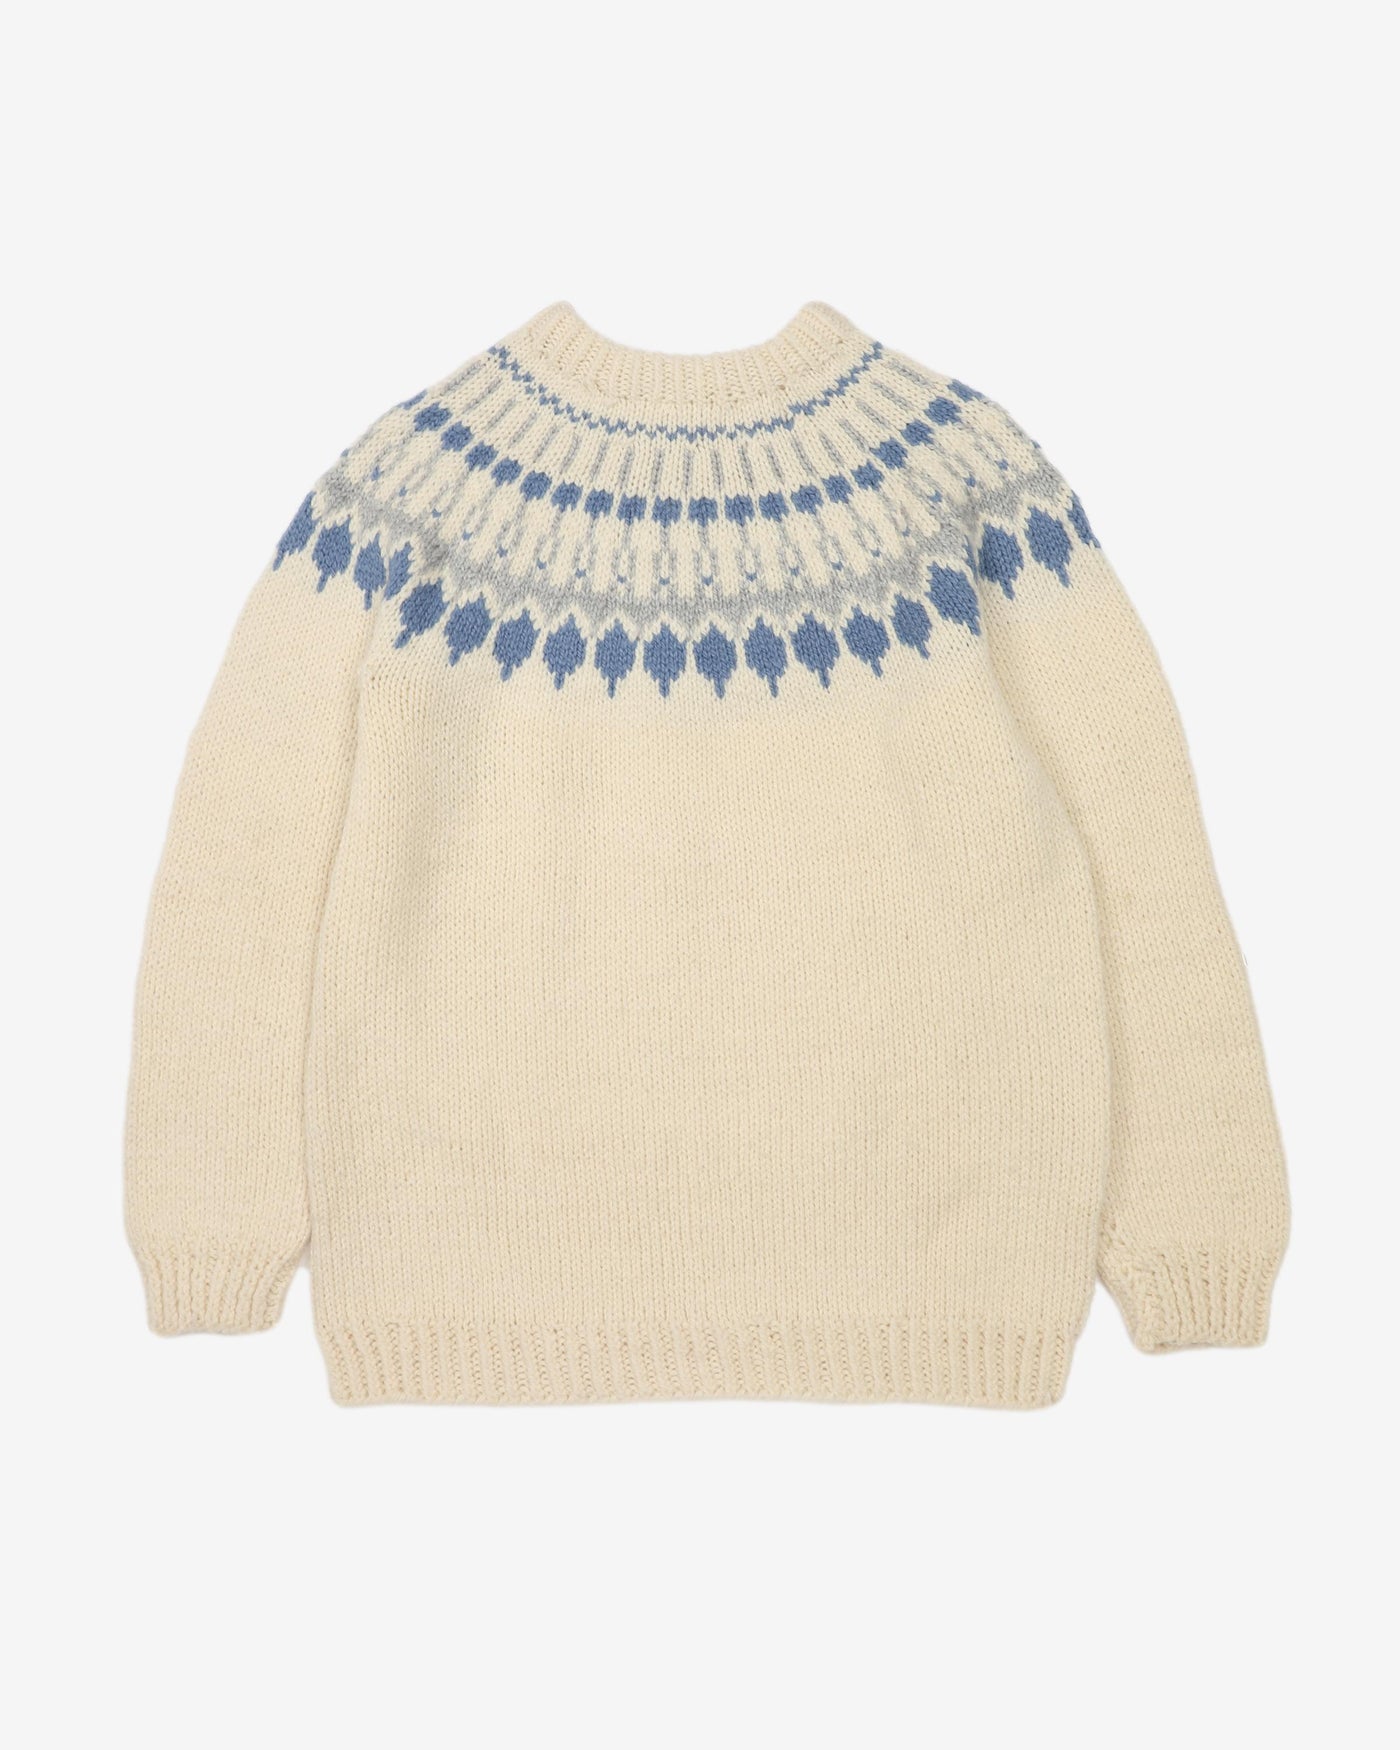 Vintage 80s Chunky Cream / Blue Knitted Sweatshirt - L